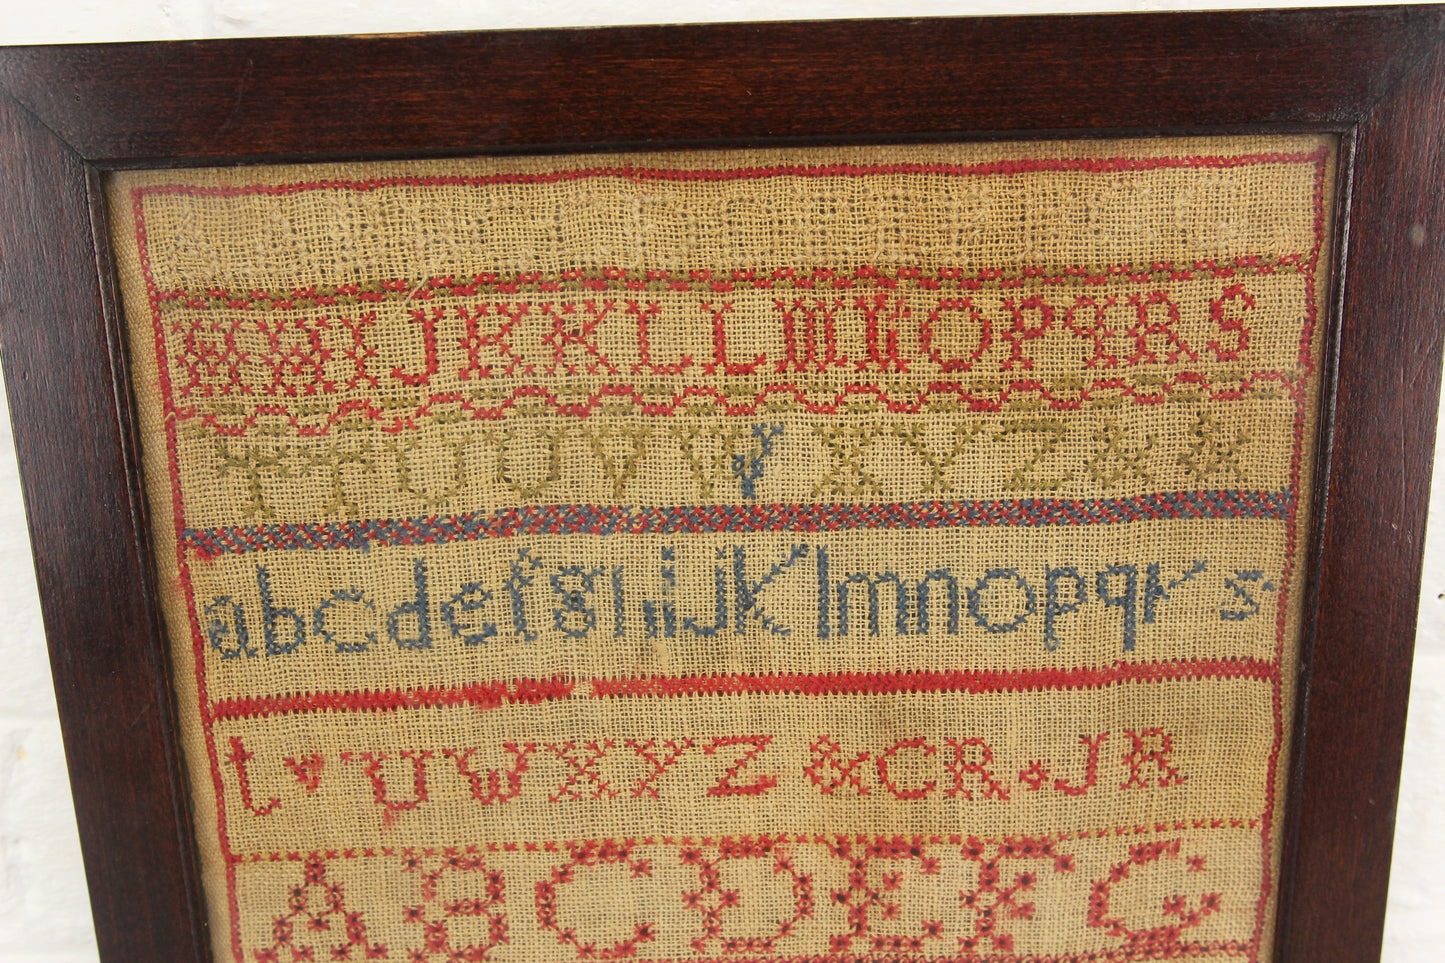 Framed Antique Embroidery Cross Stitch Alphabet Sampler - 11.5 x 15"